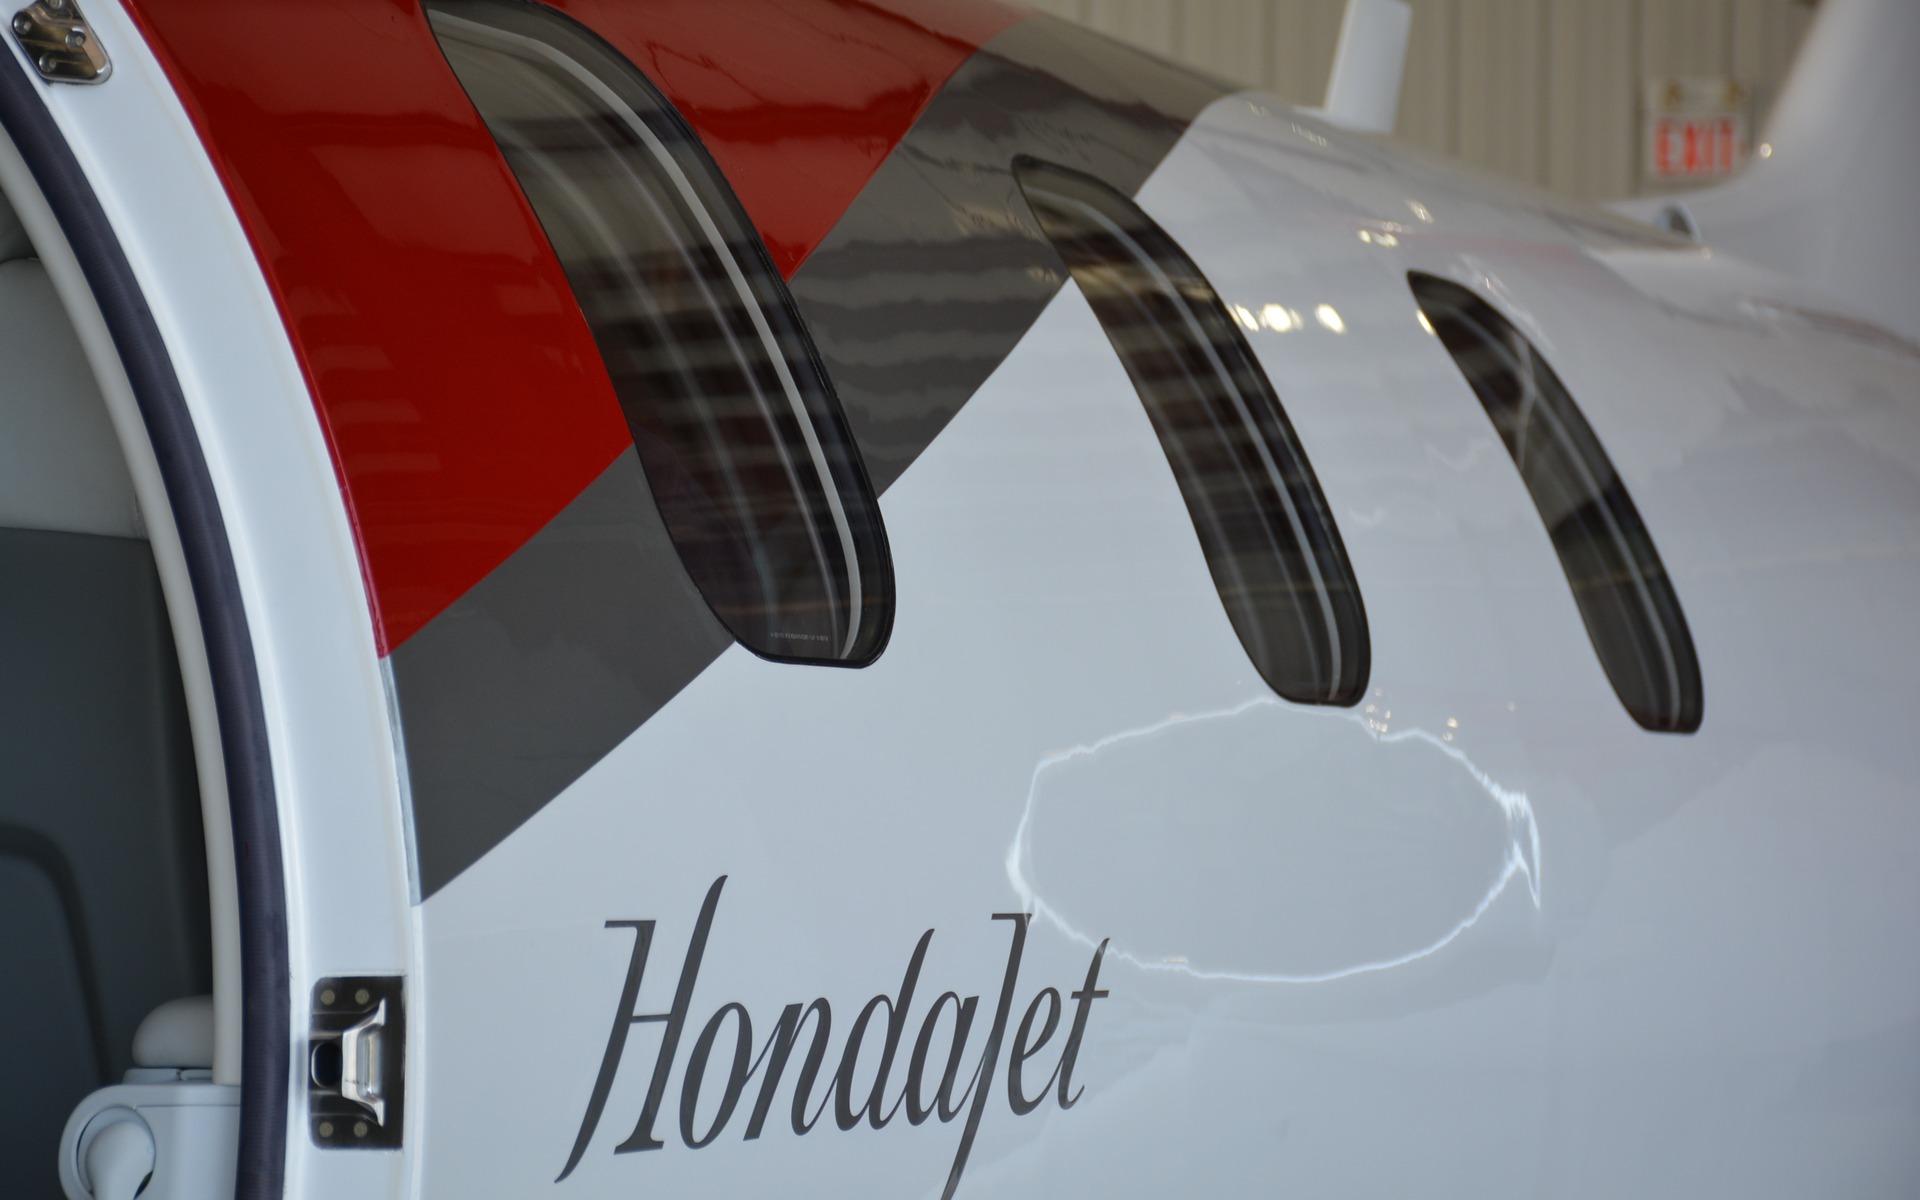 A look at the HondaJet